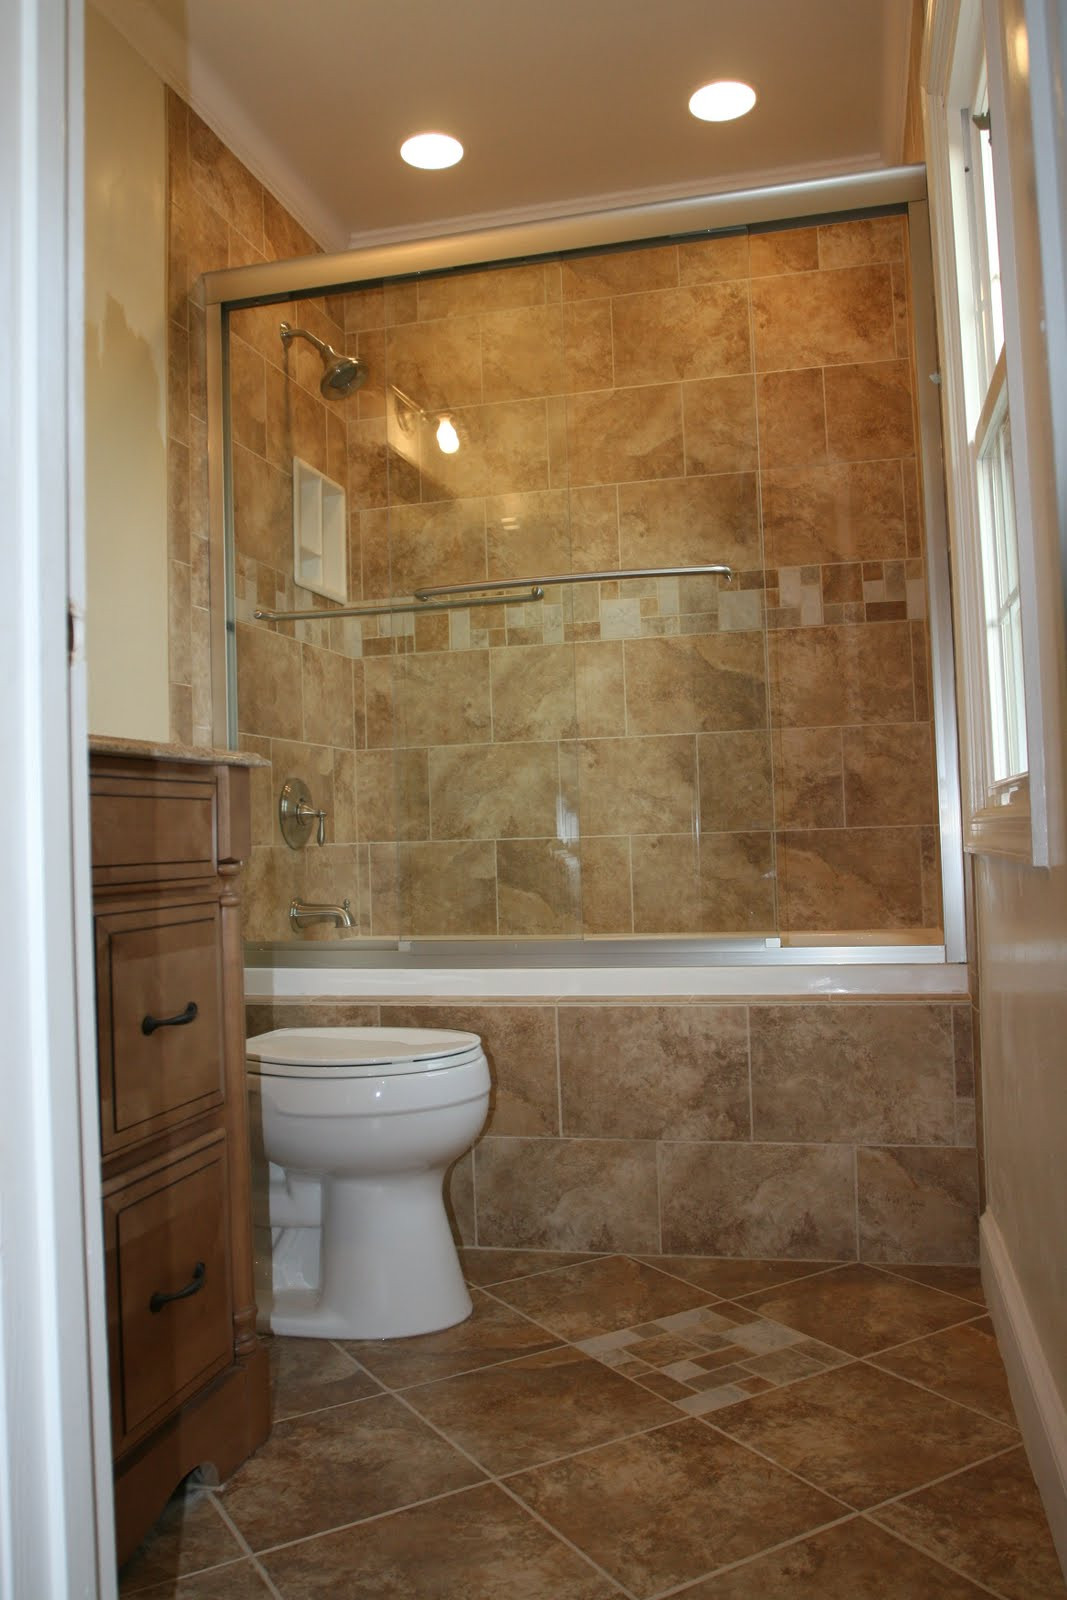 Bathroom Shower Tiles Ideas
 Bathroom Remodeling Design Ideas Tile Shower Niches